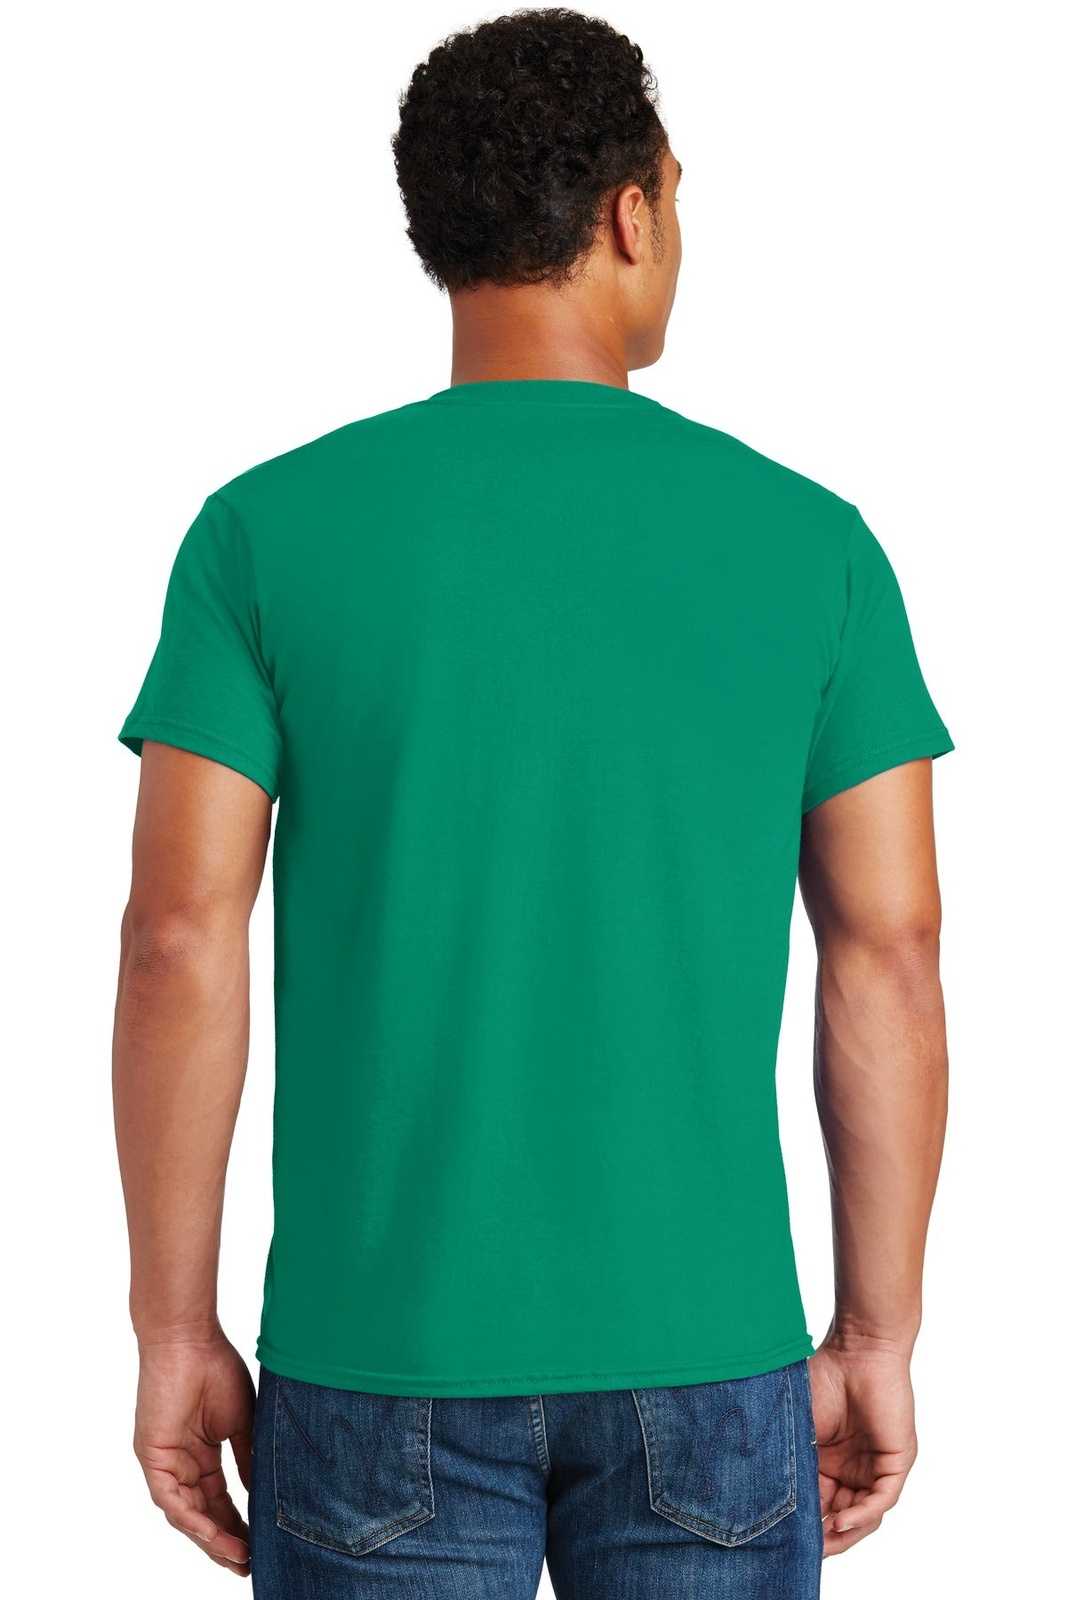 Hanes 4980 Nano-T Cotton T-Shirt - Kelly Green - HIT a Double